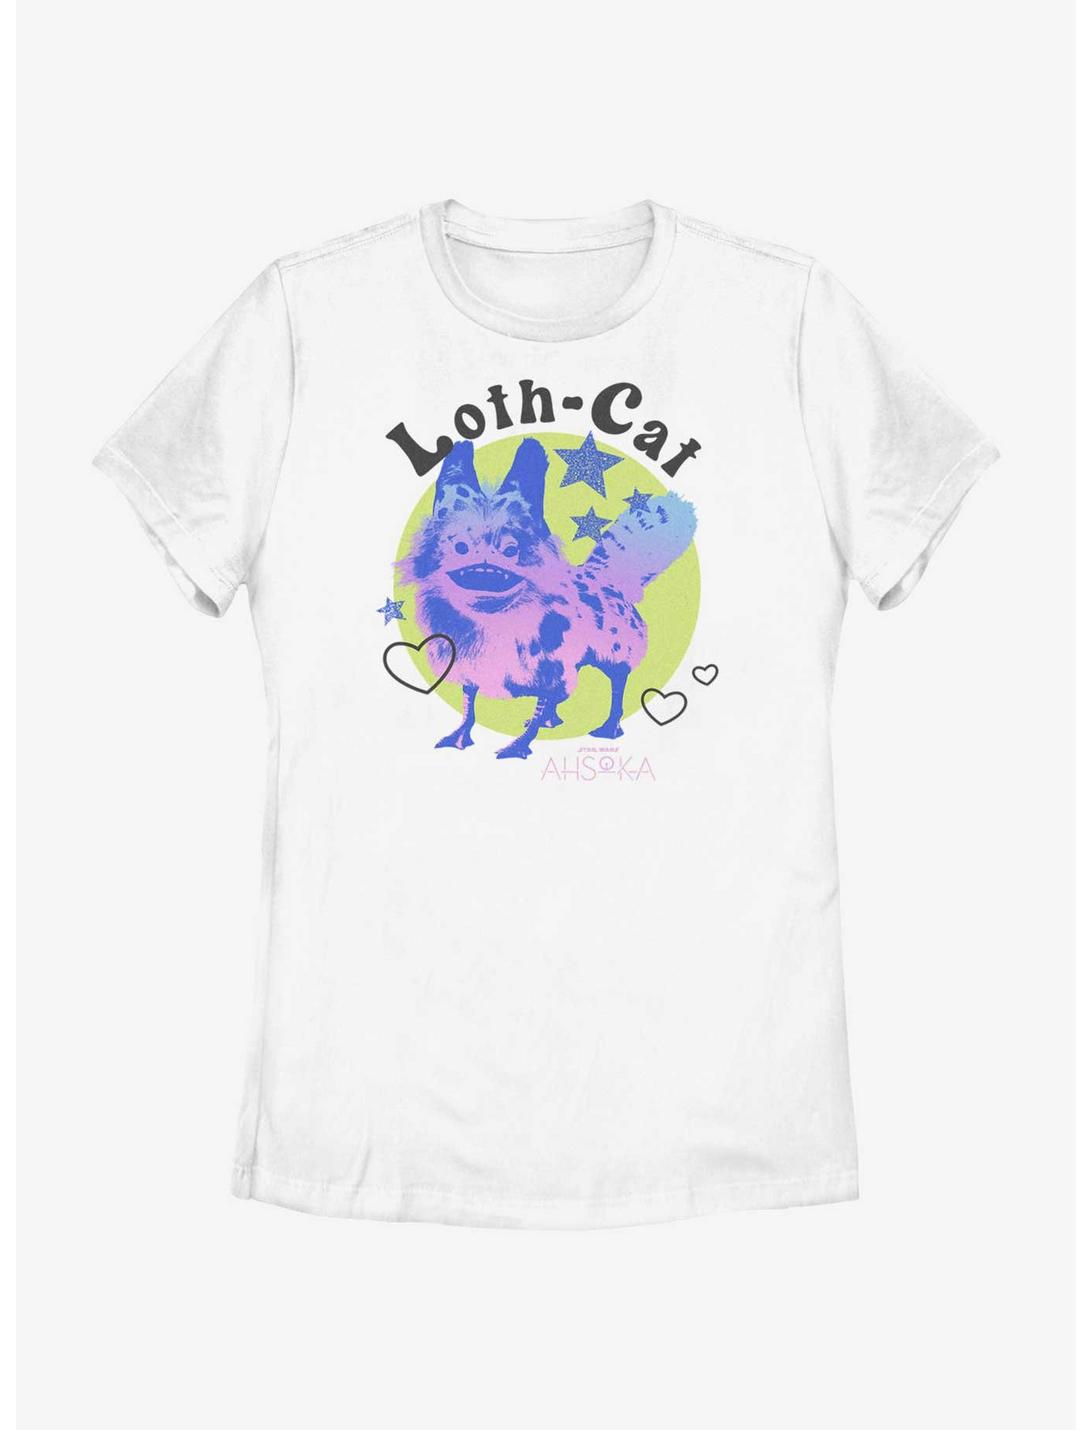 Star Wars Ahsoka Loth-Cat Cuteness Womens T-Shirt, WHITE, hi-res